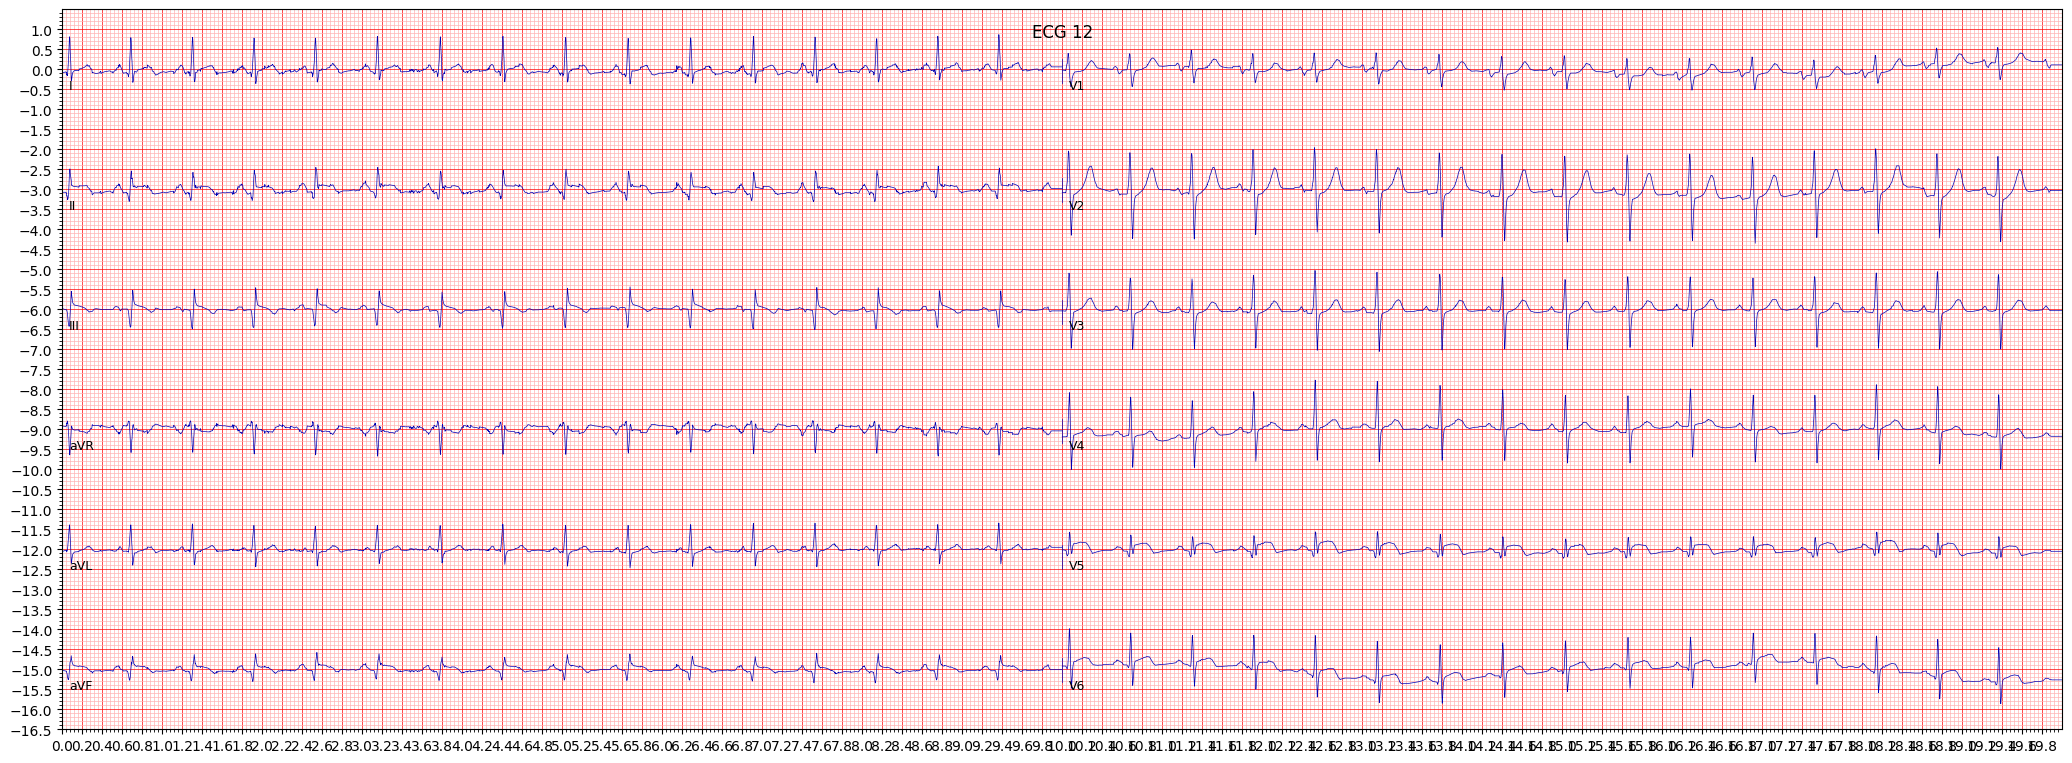 inferolateral myocardial infarction (ILMI) example 827